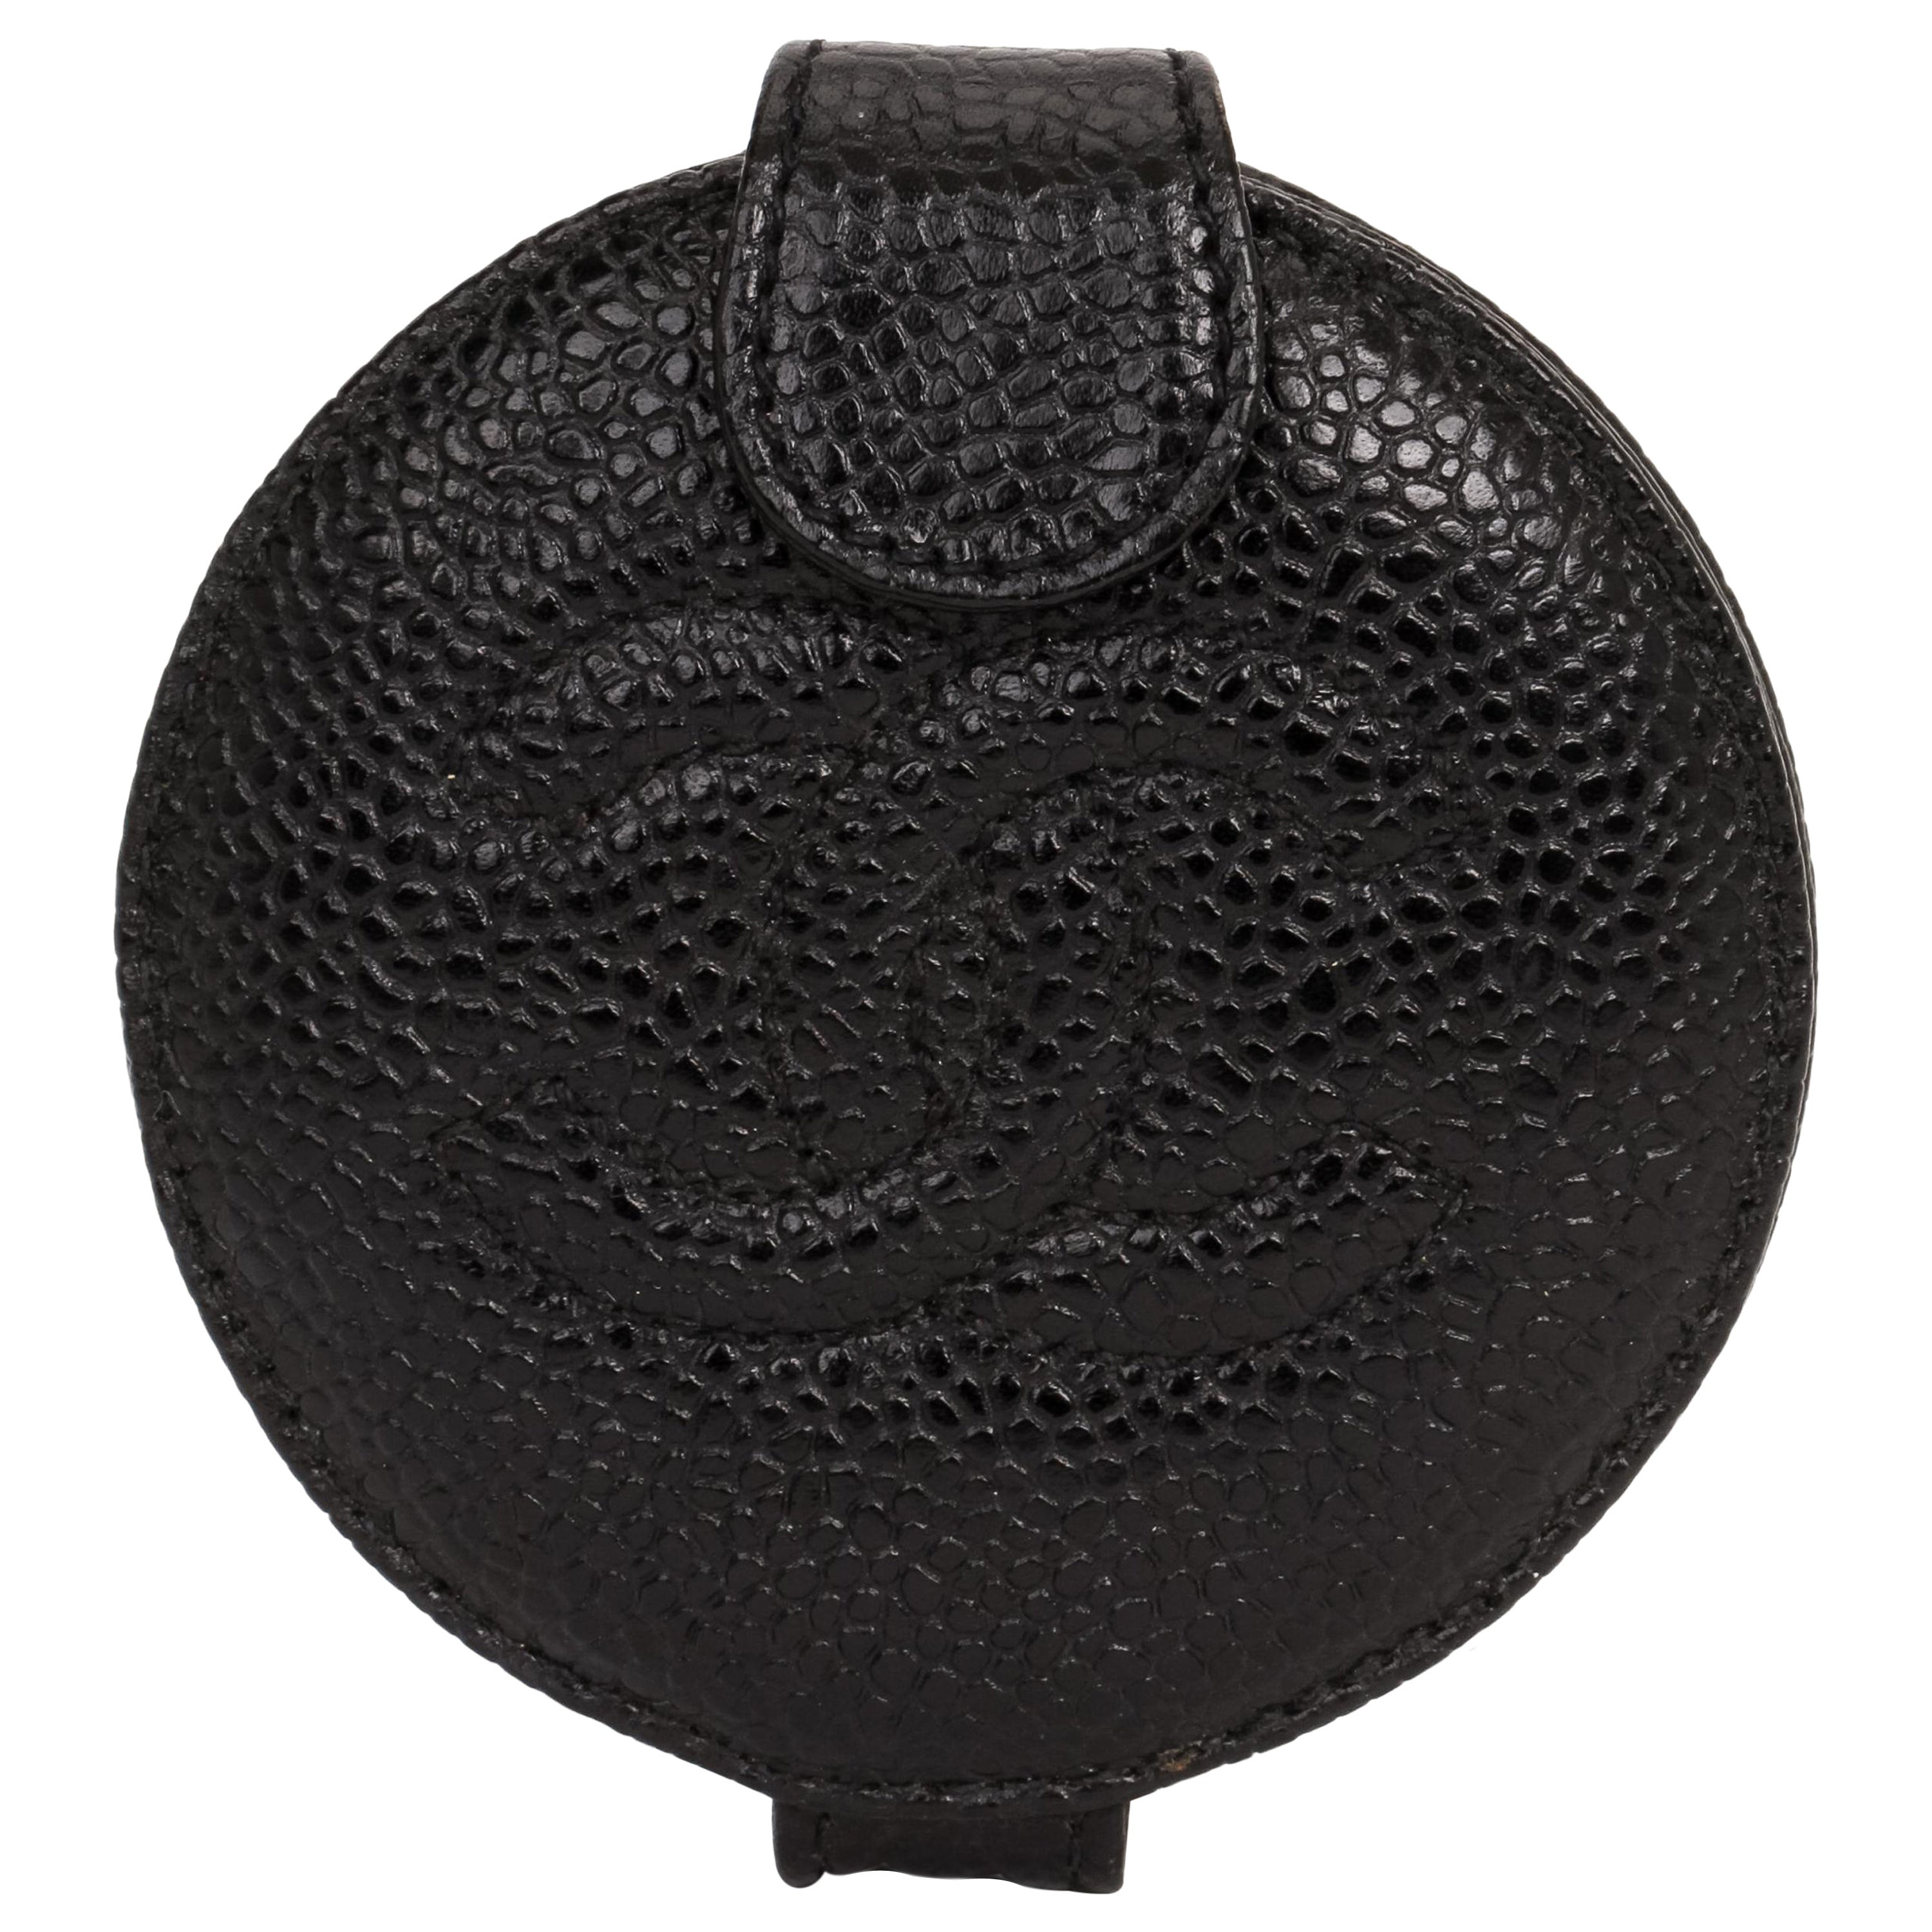 1990's Vintage Chanel Black Caviar Leather Compact Mirror